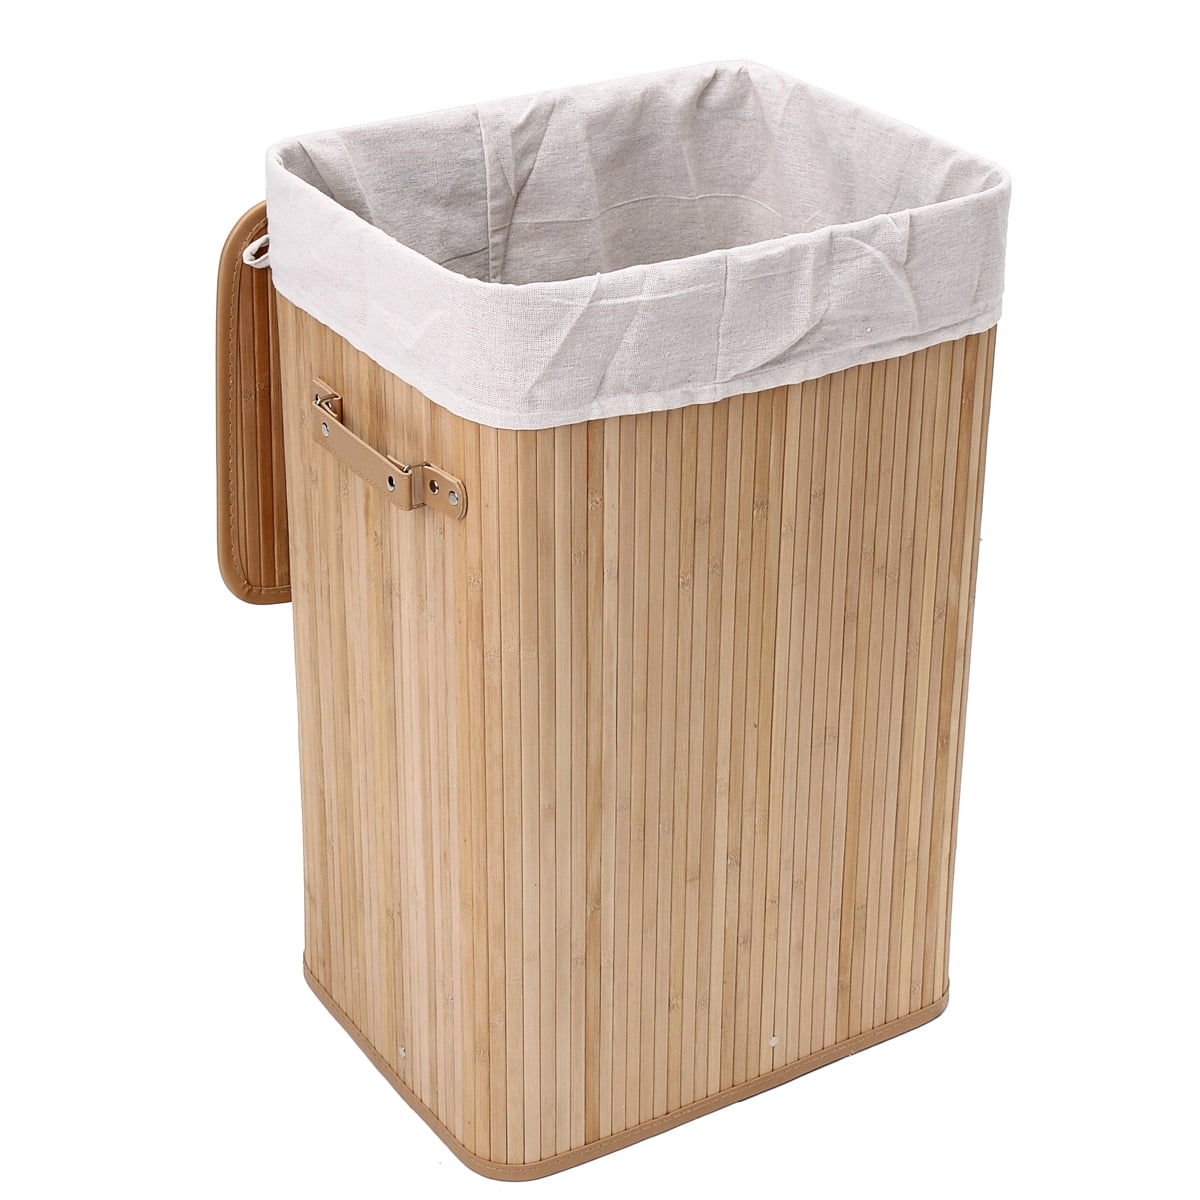 Details about   Bamboo Laundry Basket Hamper Wicker Clothes Storage Bag Sorter Bin Organizer Lid 